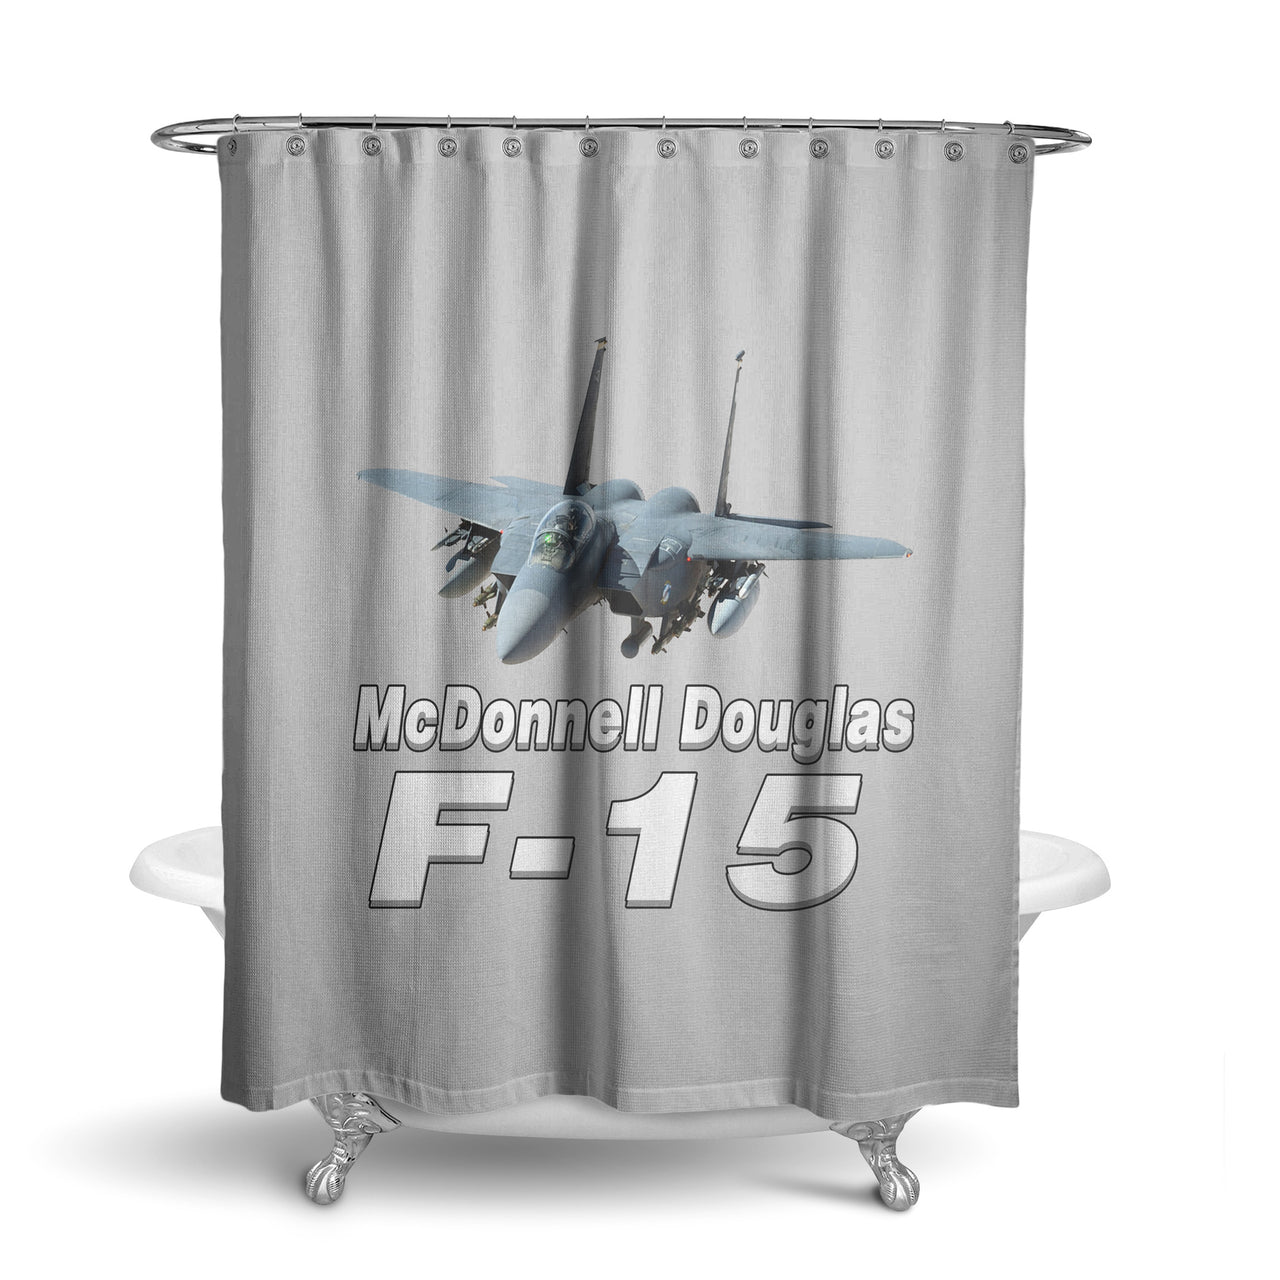 The McDonnell Douglas F15 Designed Shower Curtains